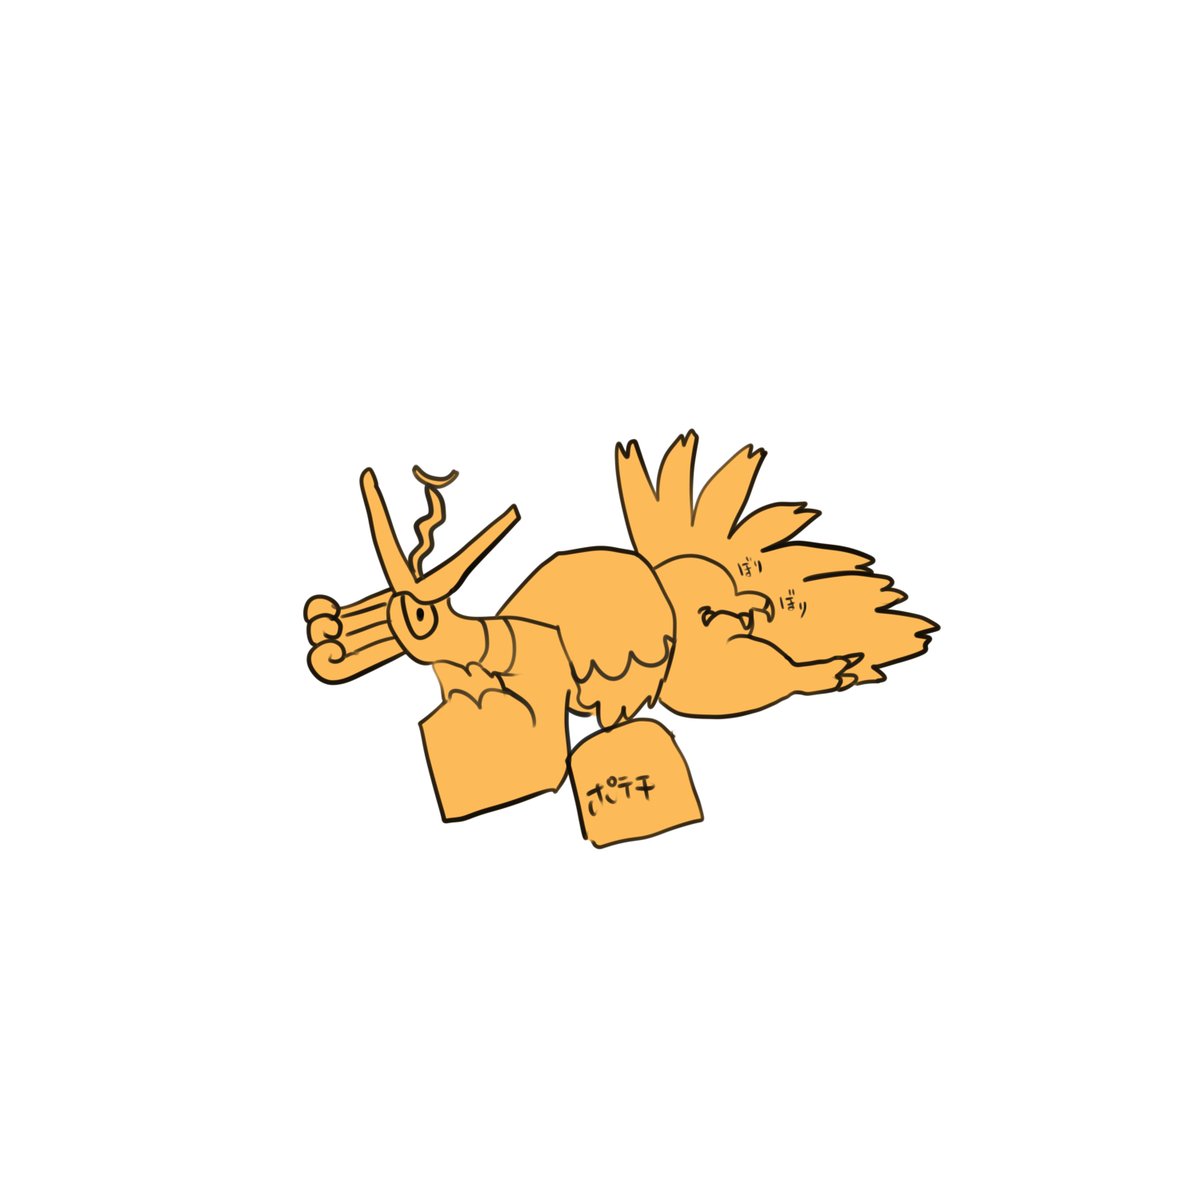 no humans pokemon (creature) simple background white background monochrome comic yellow theme  illustration images